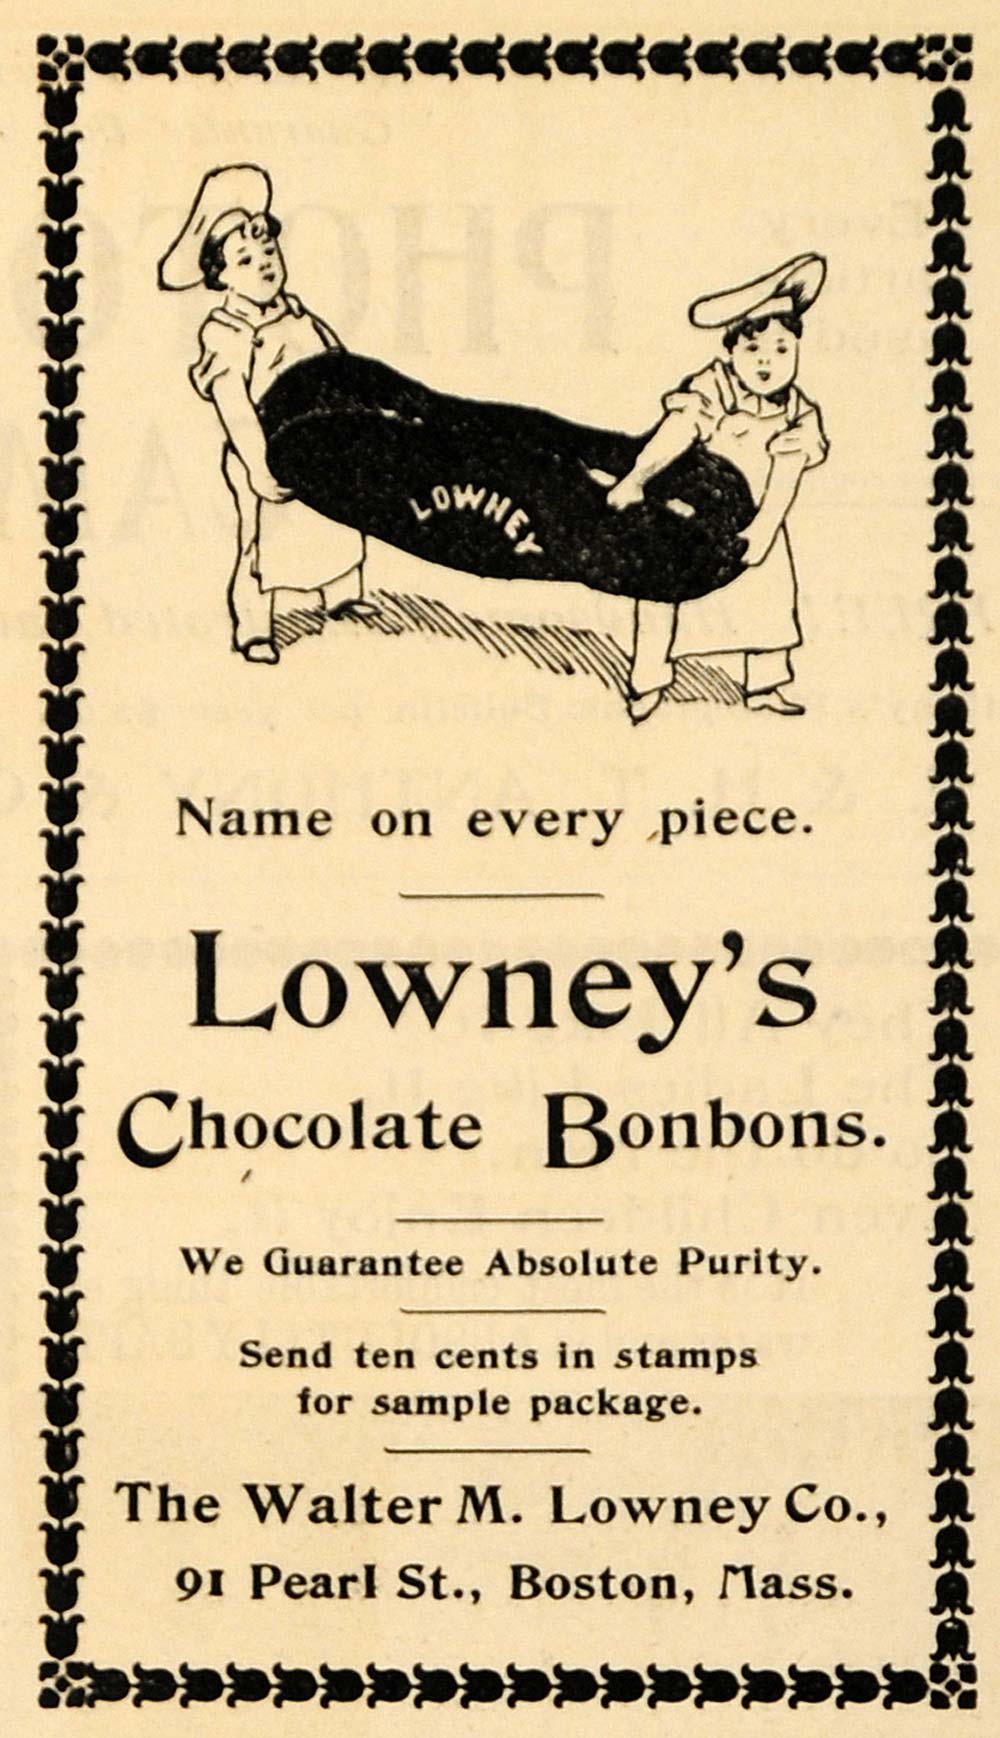 1895 Ad Walter M Lowney Company Chocolate Bonbons Candy - ORIGINAL MUN1